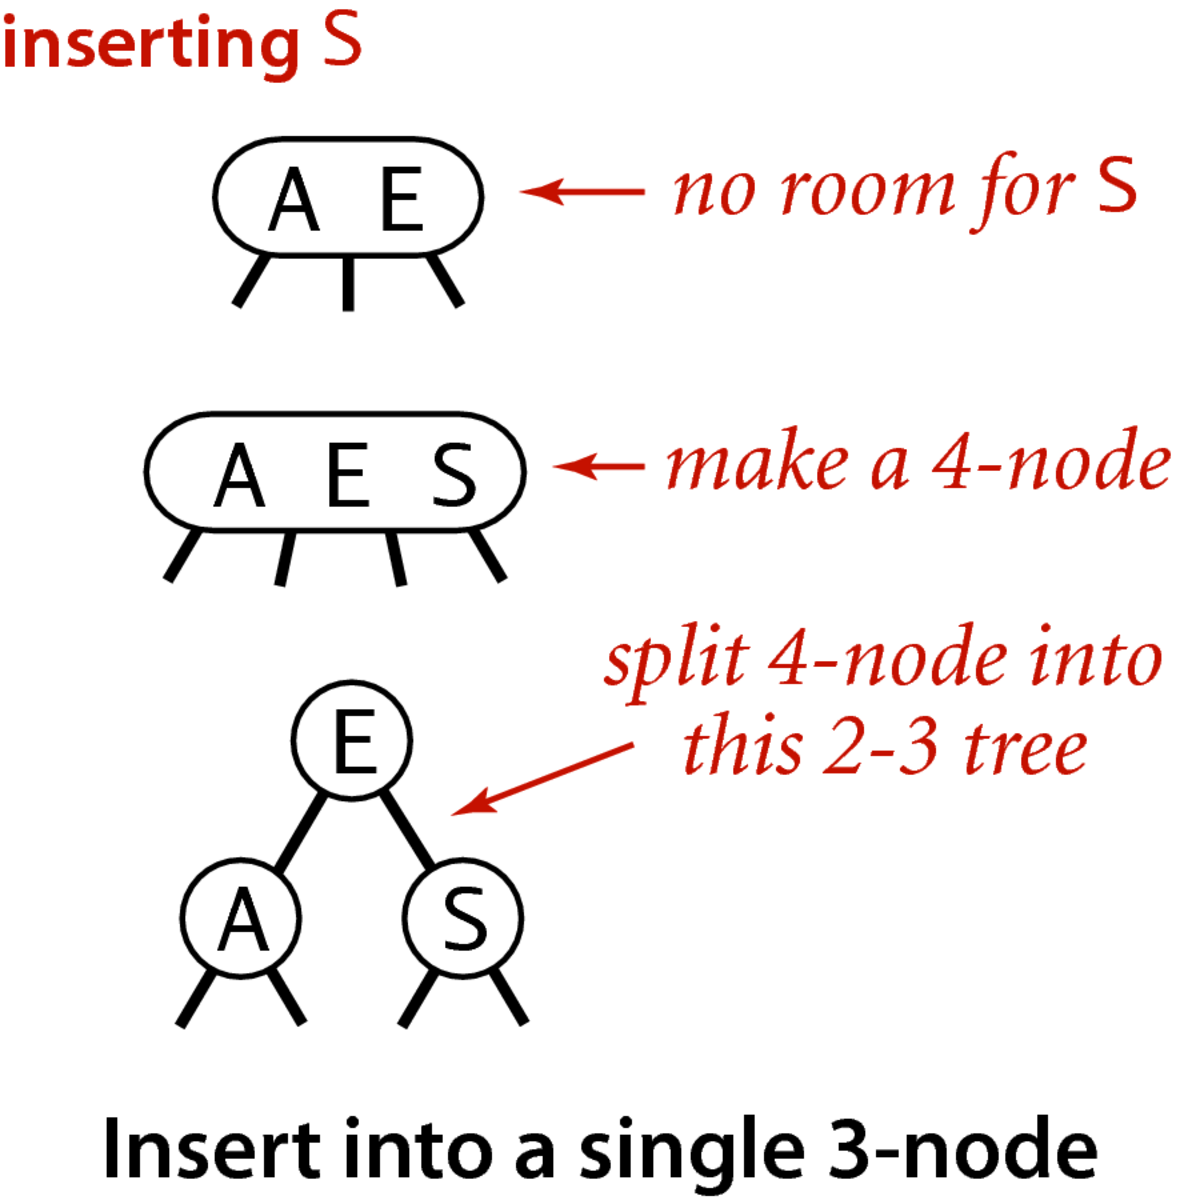 [Insert into a single 3-node]